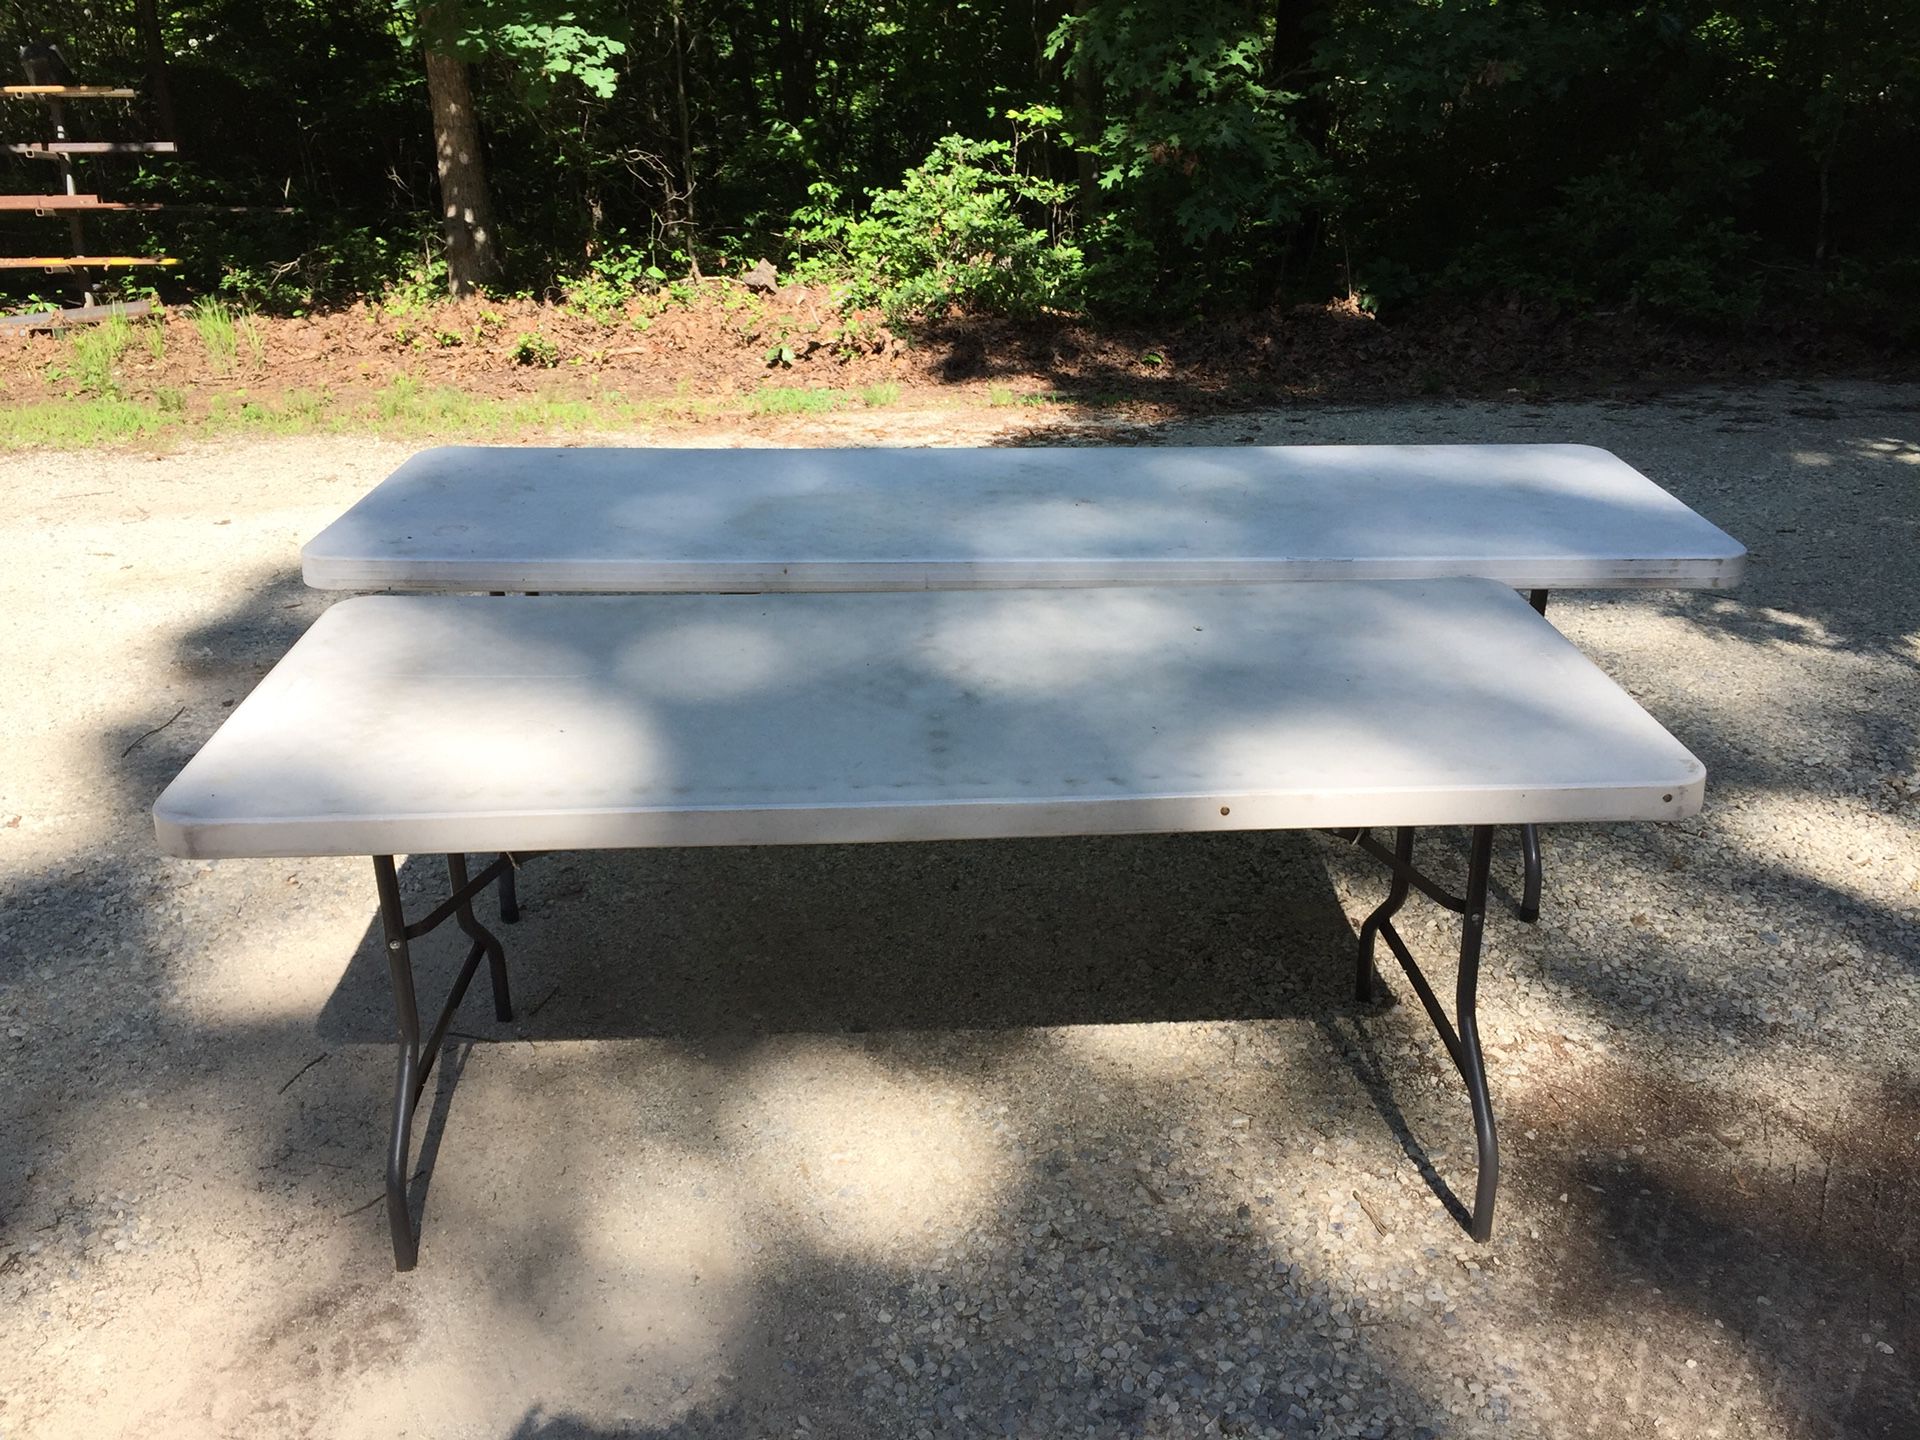 Plastic table 8 foot